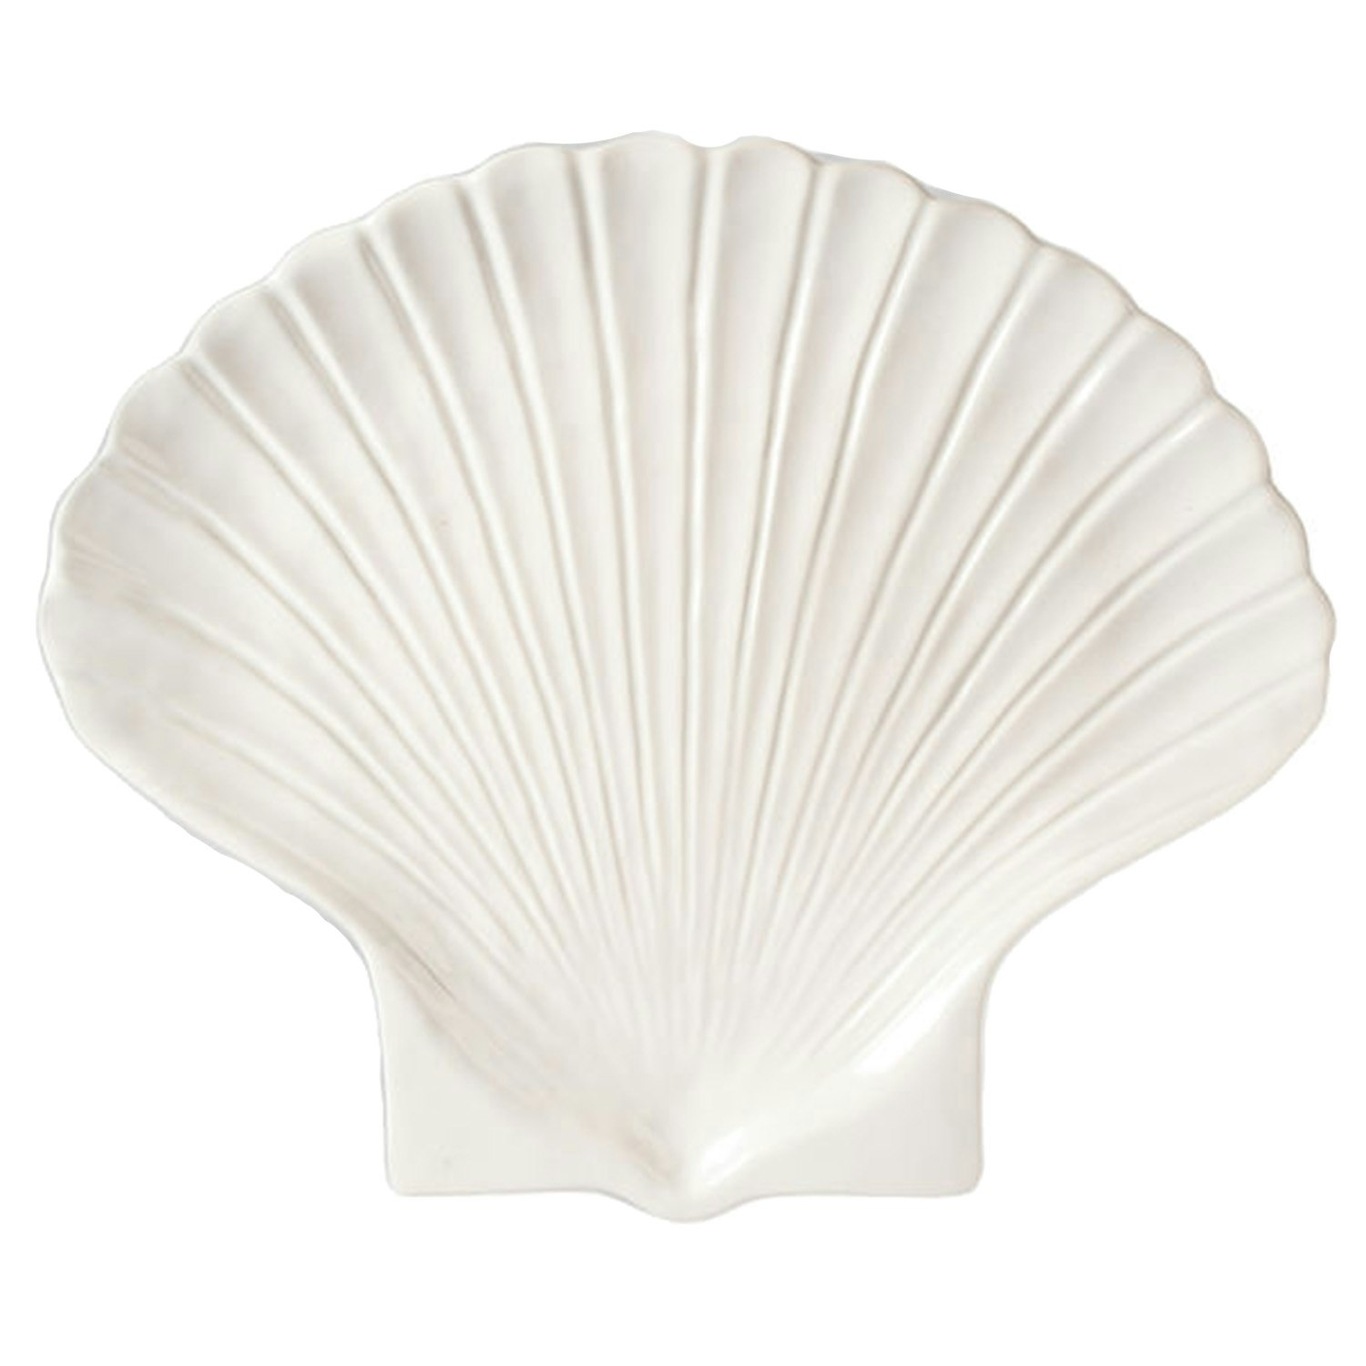 Shell Plate XL, White